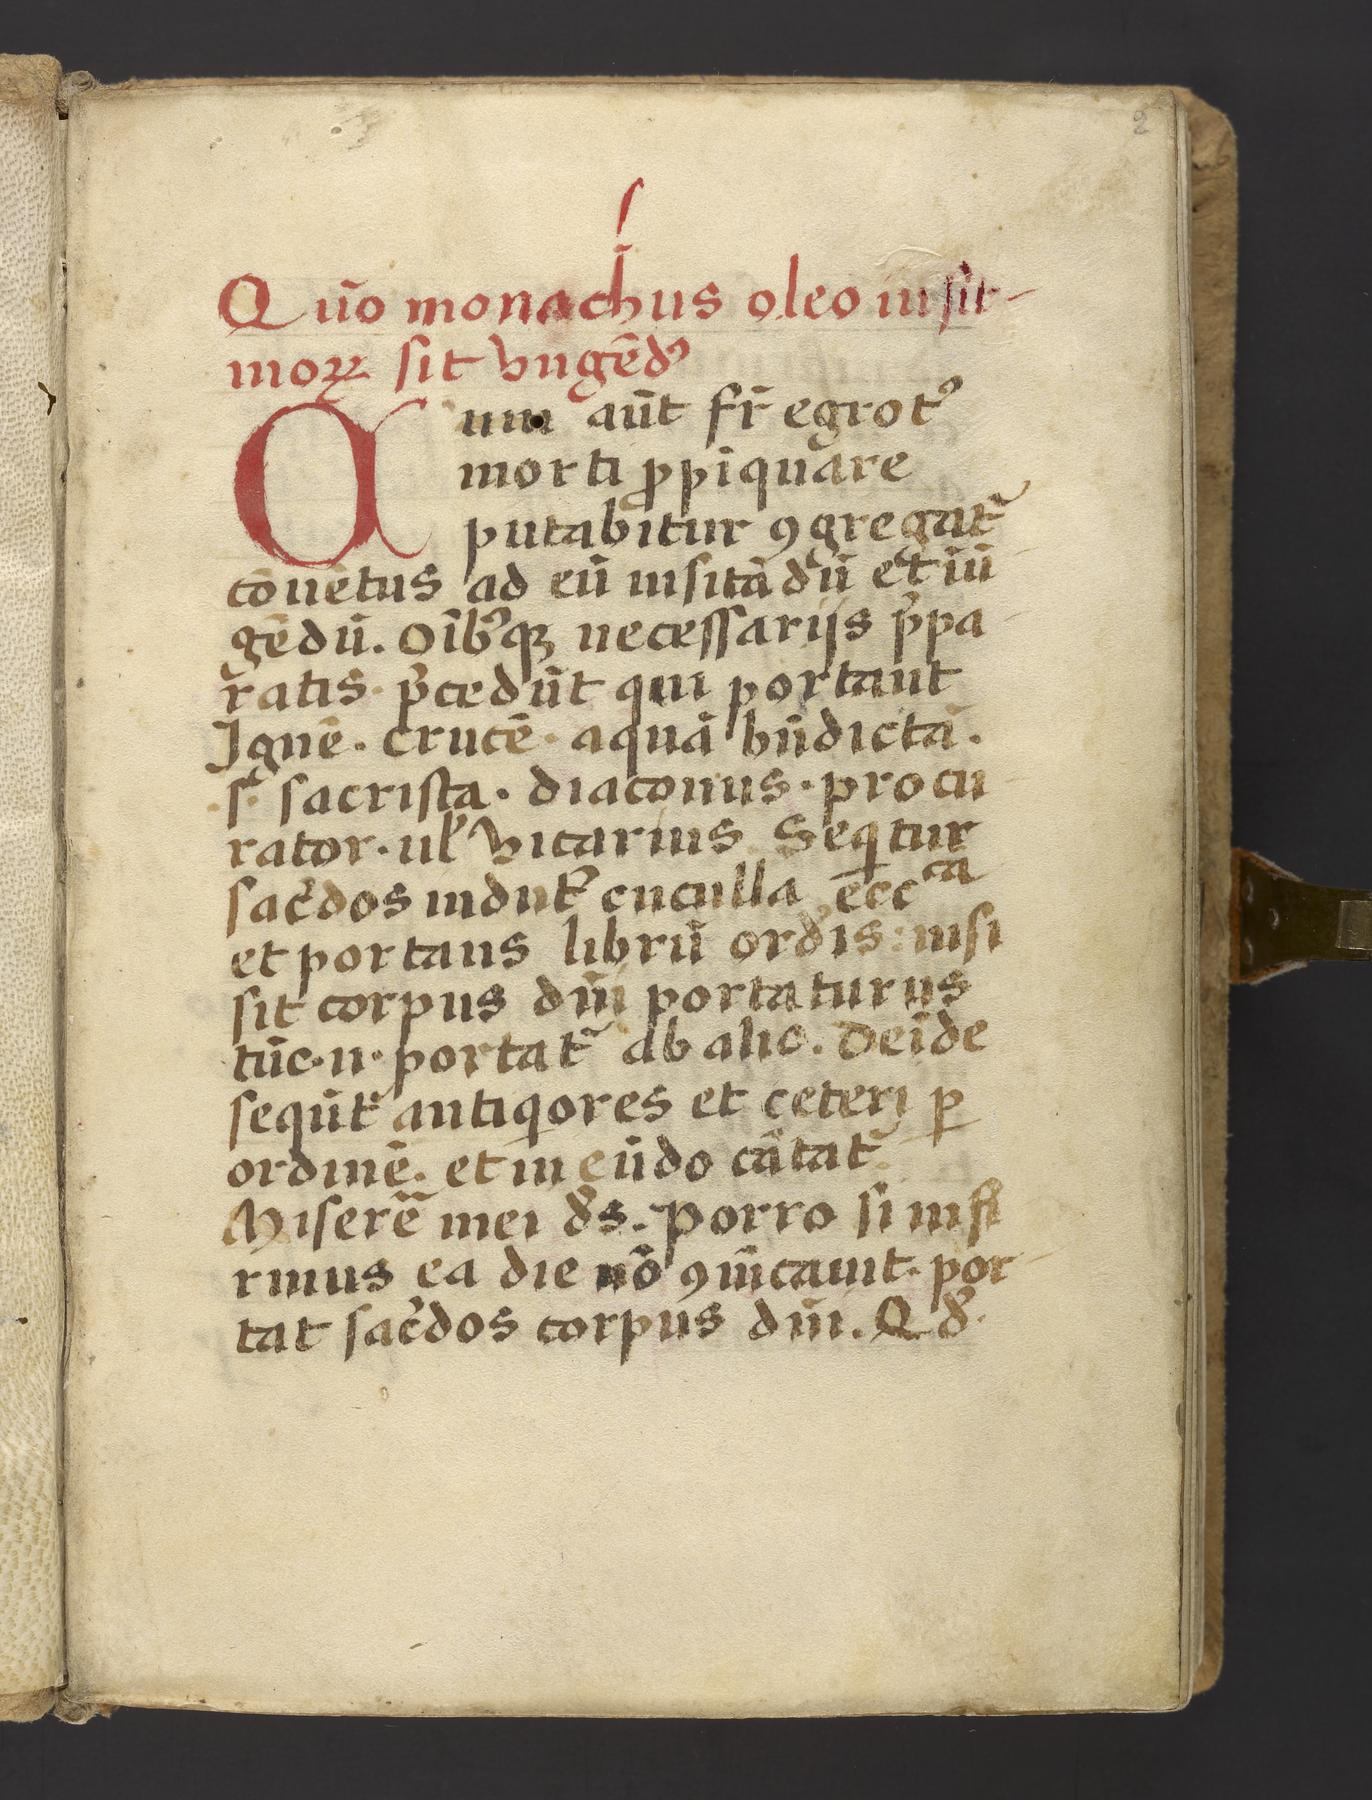 Coffee with a Codex: Monastic ritual book